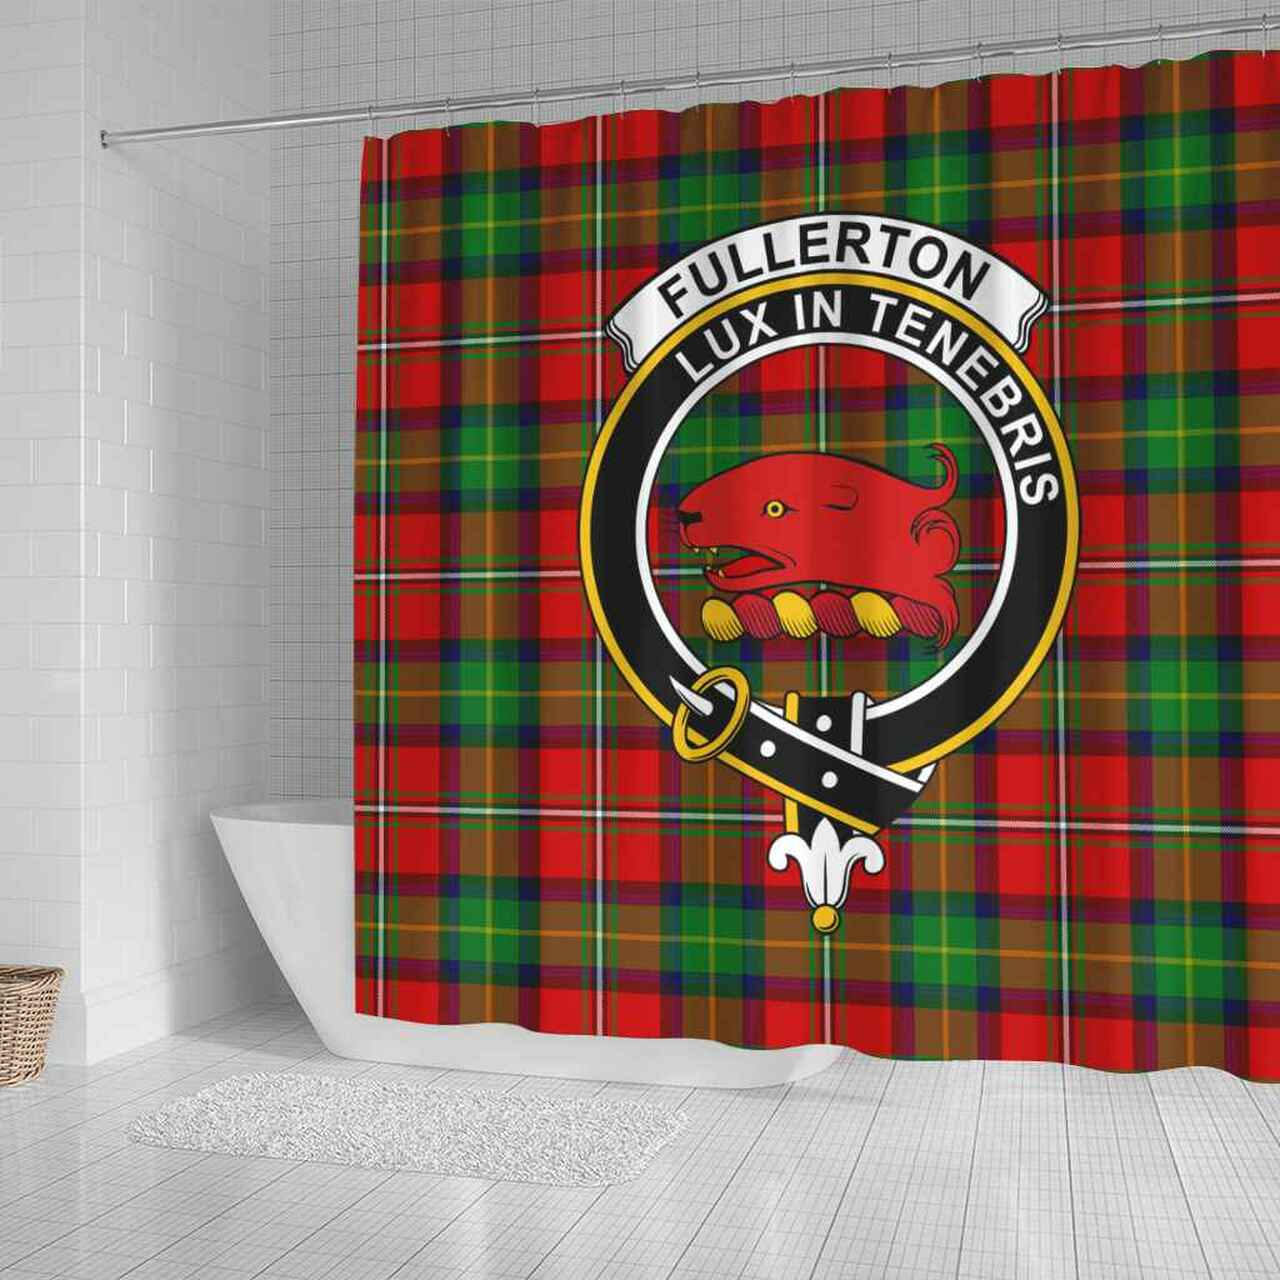 Fullerton Tartan Crest Shower Curtain